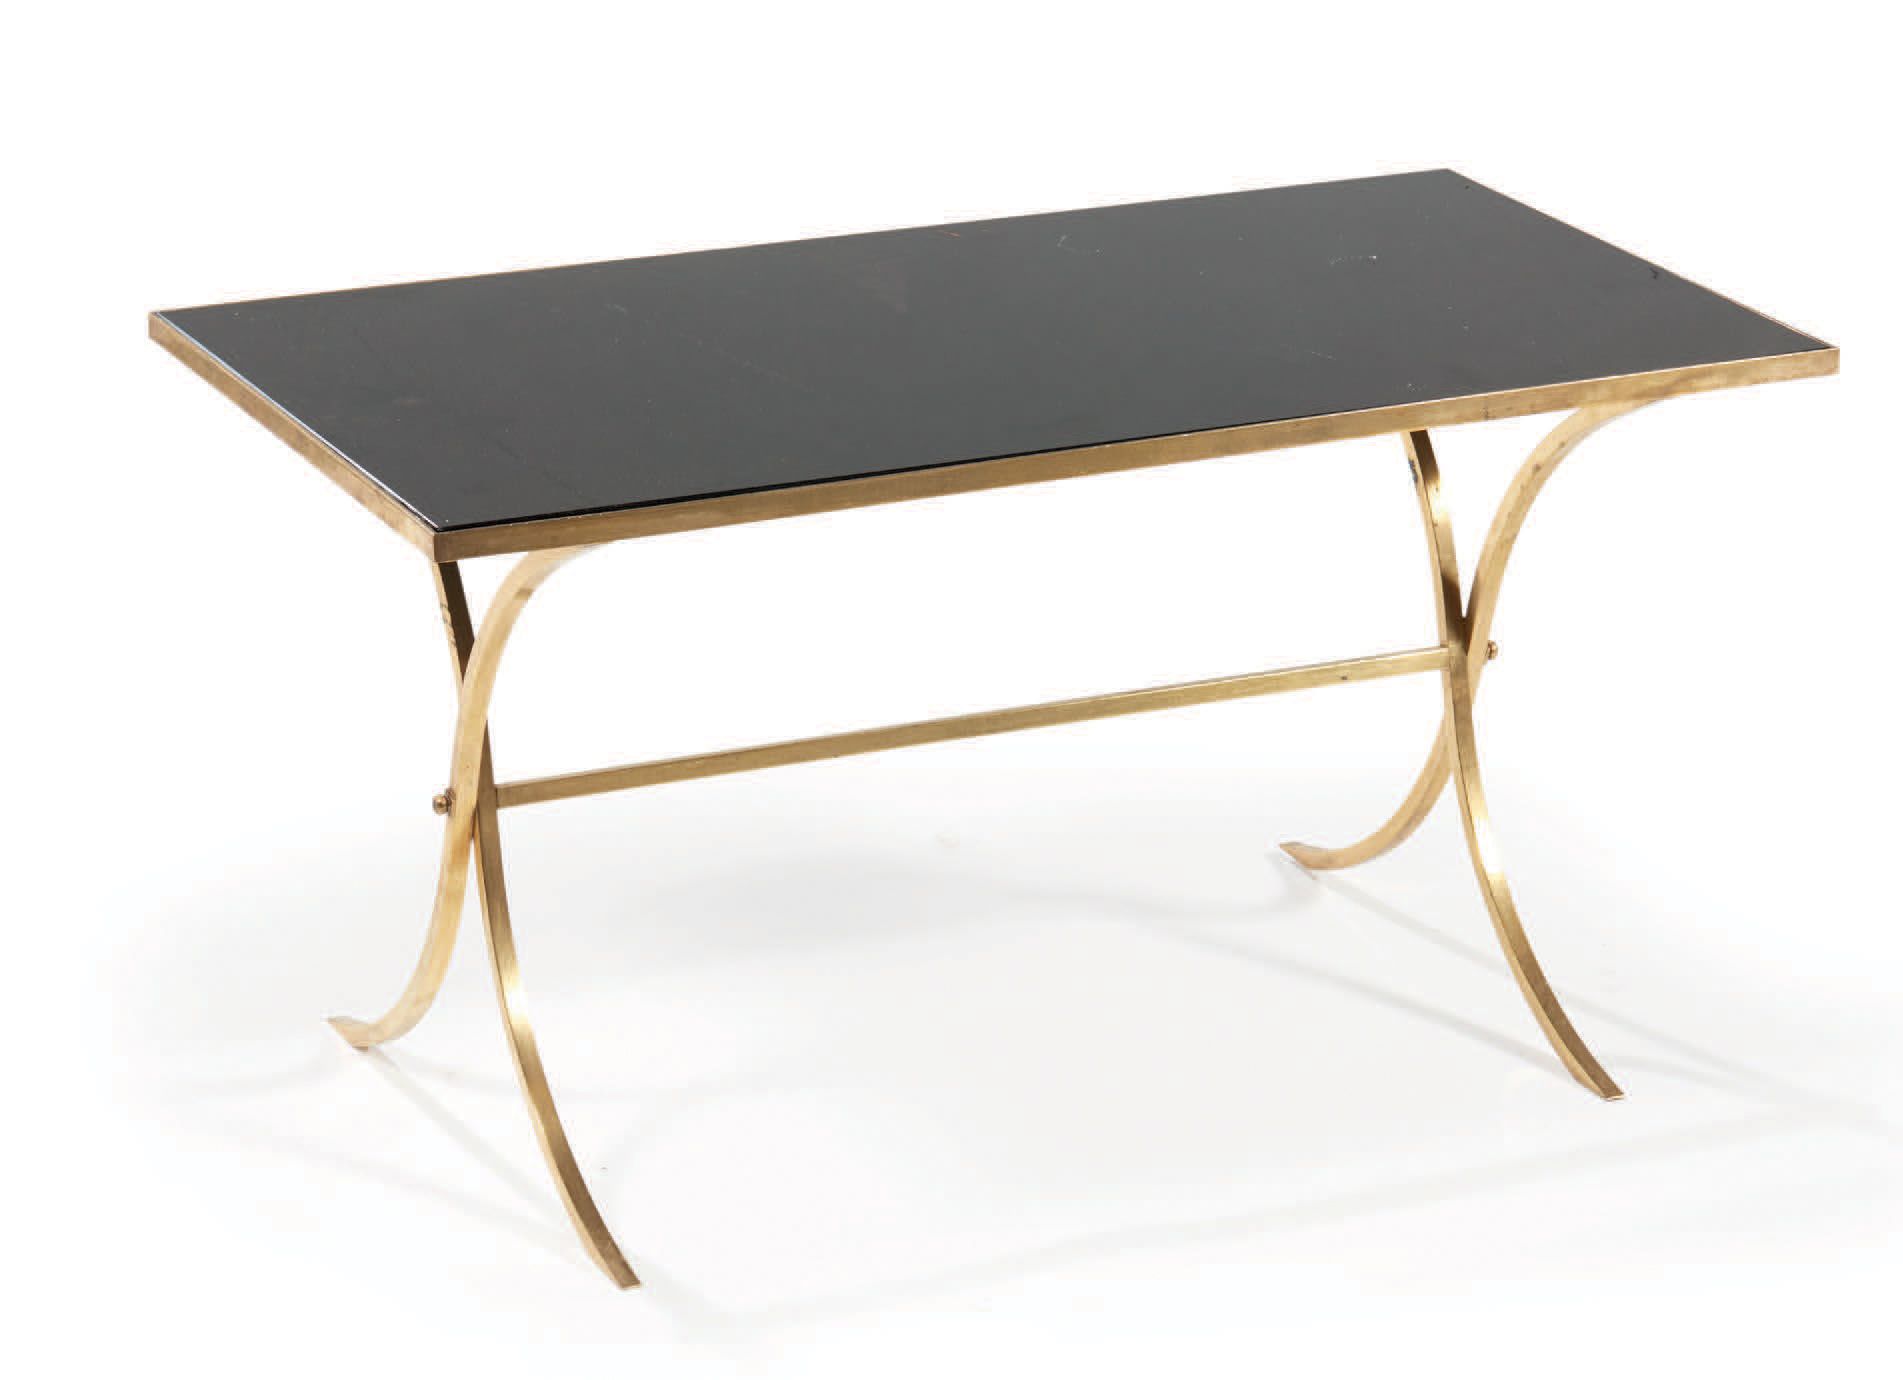 TRAVAIL FRANÇAIS 镀金的黄铜咖啡桌，长方形的黑色玻璃桌面放在一个弯曲的底座上，形成一个 "x "
高：42 宽：80 深：43厘米